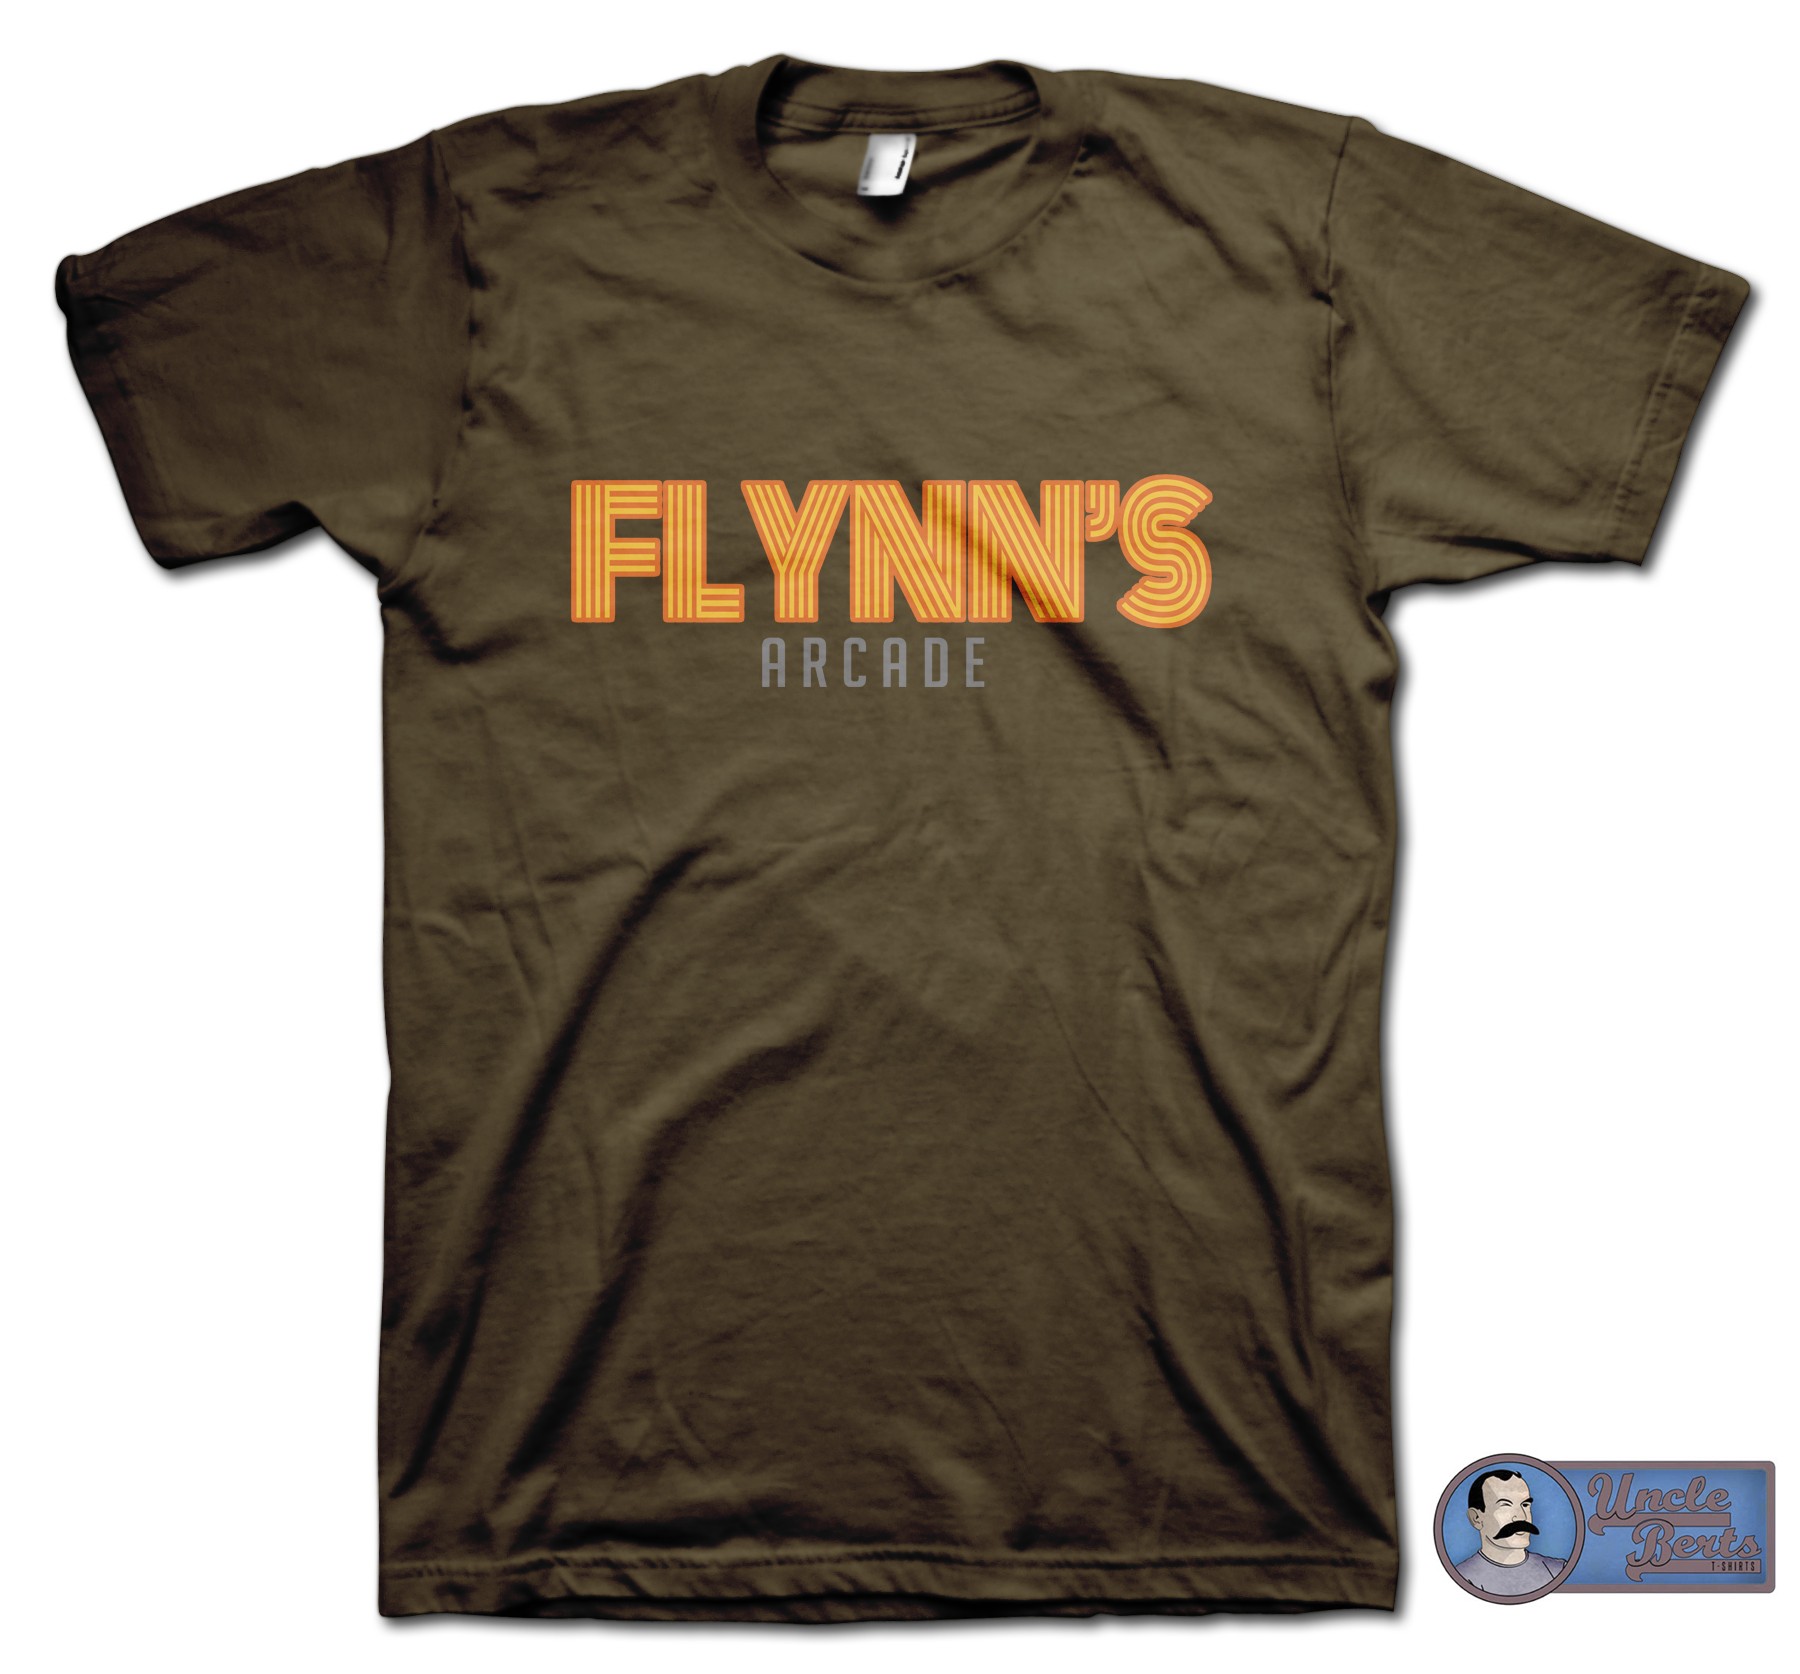 TRON (1982) Inspired FLYNN'S Arcade T-Shirt